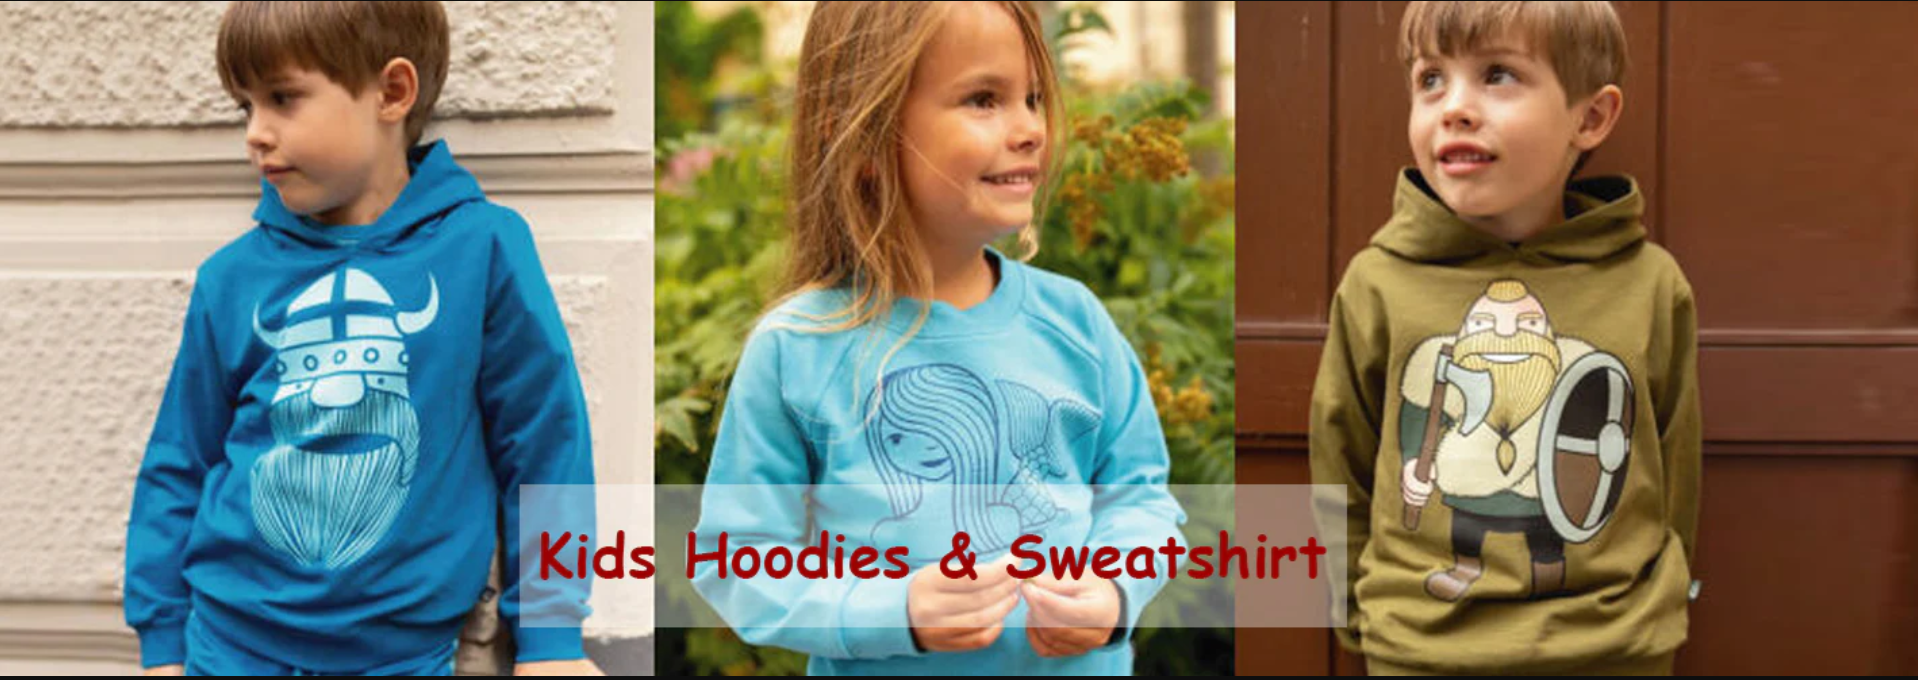 Kids Hoods & Sweatshirts